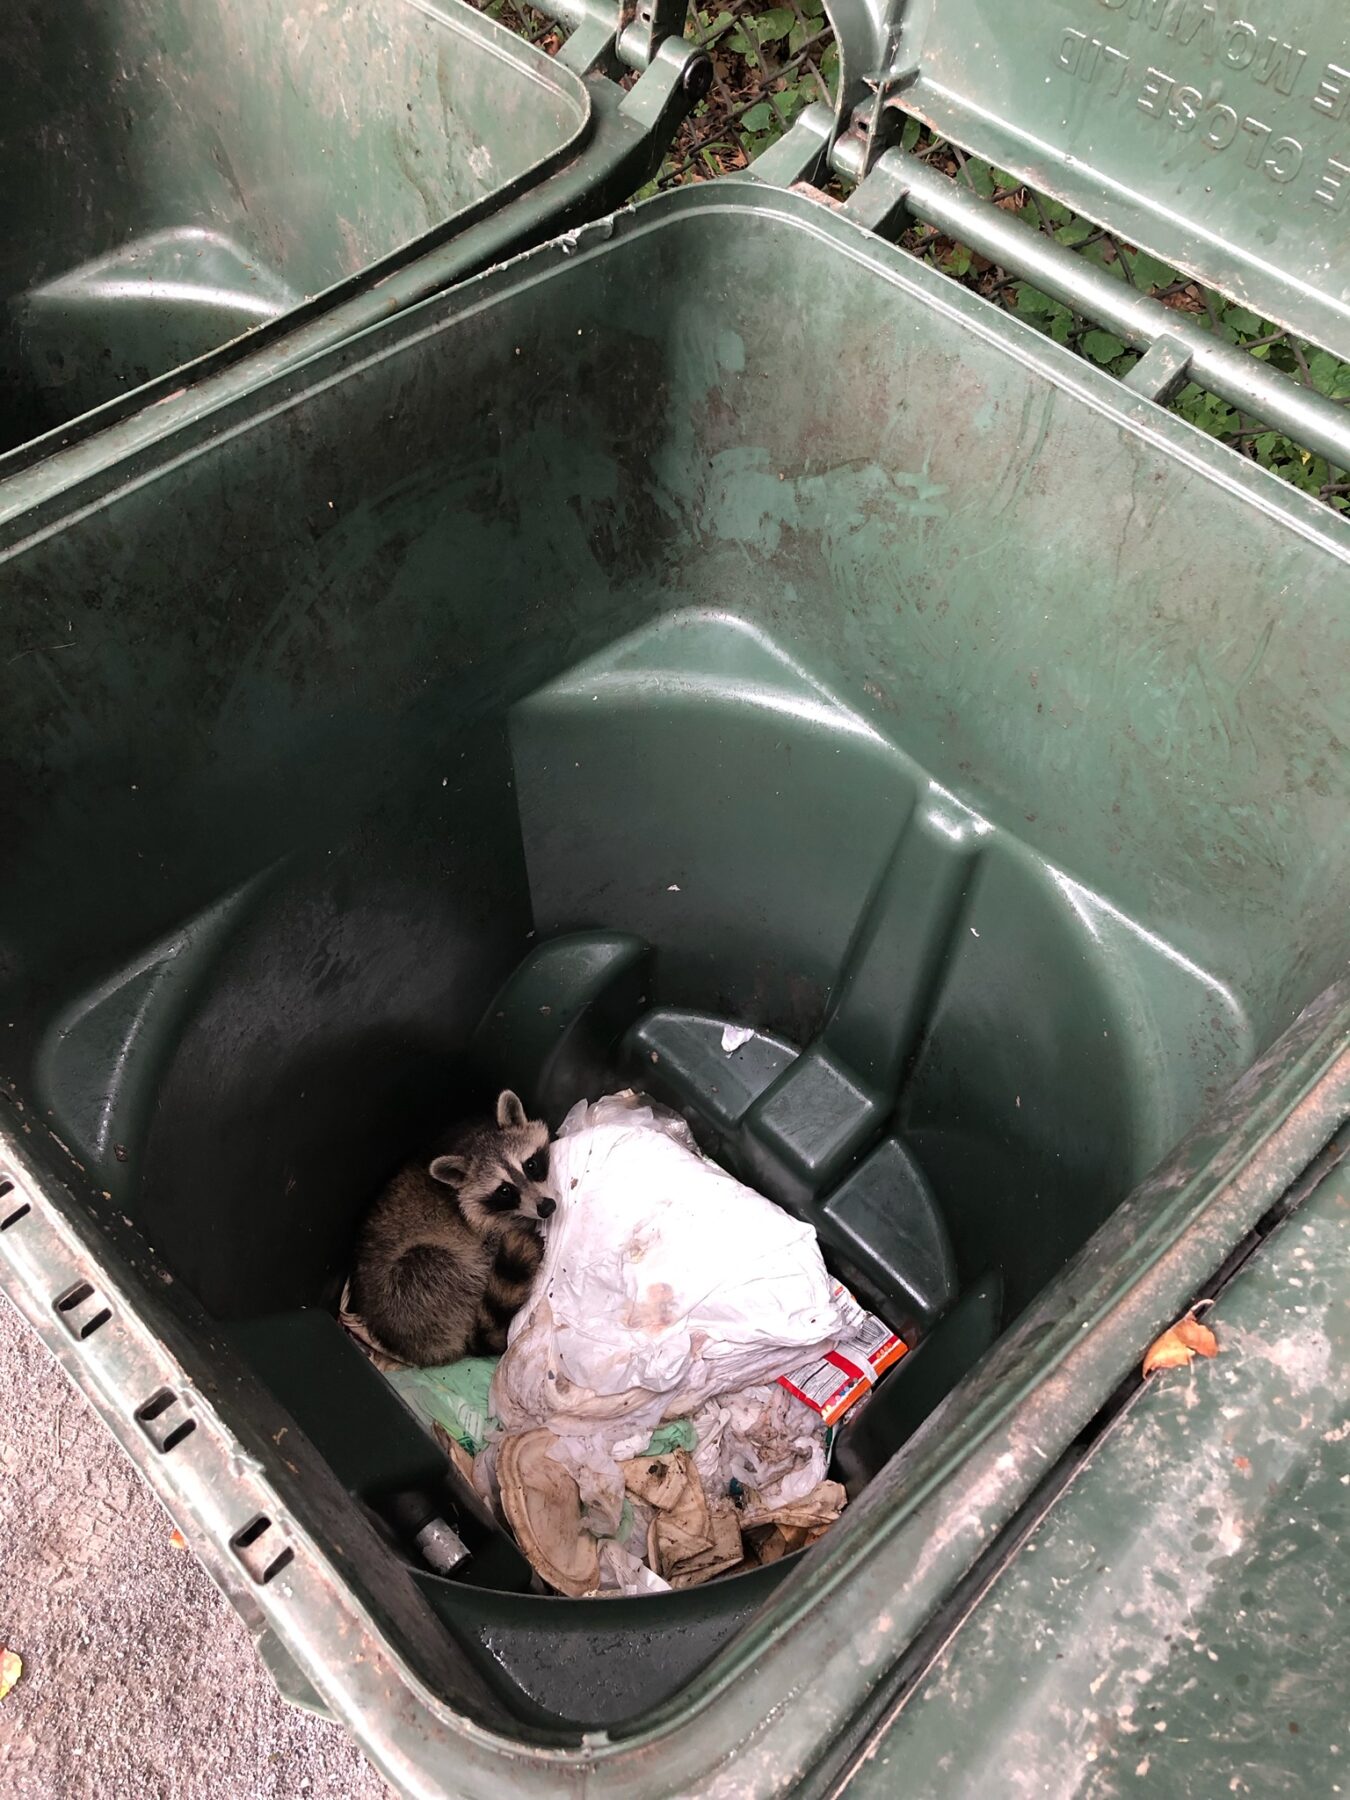 Raccoon in a trash can